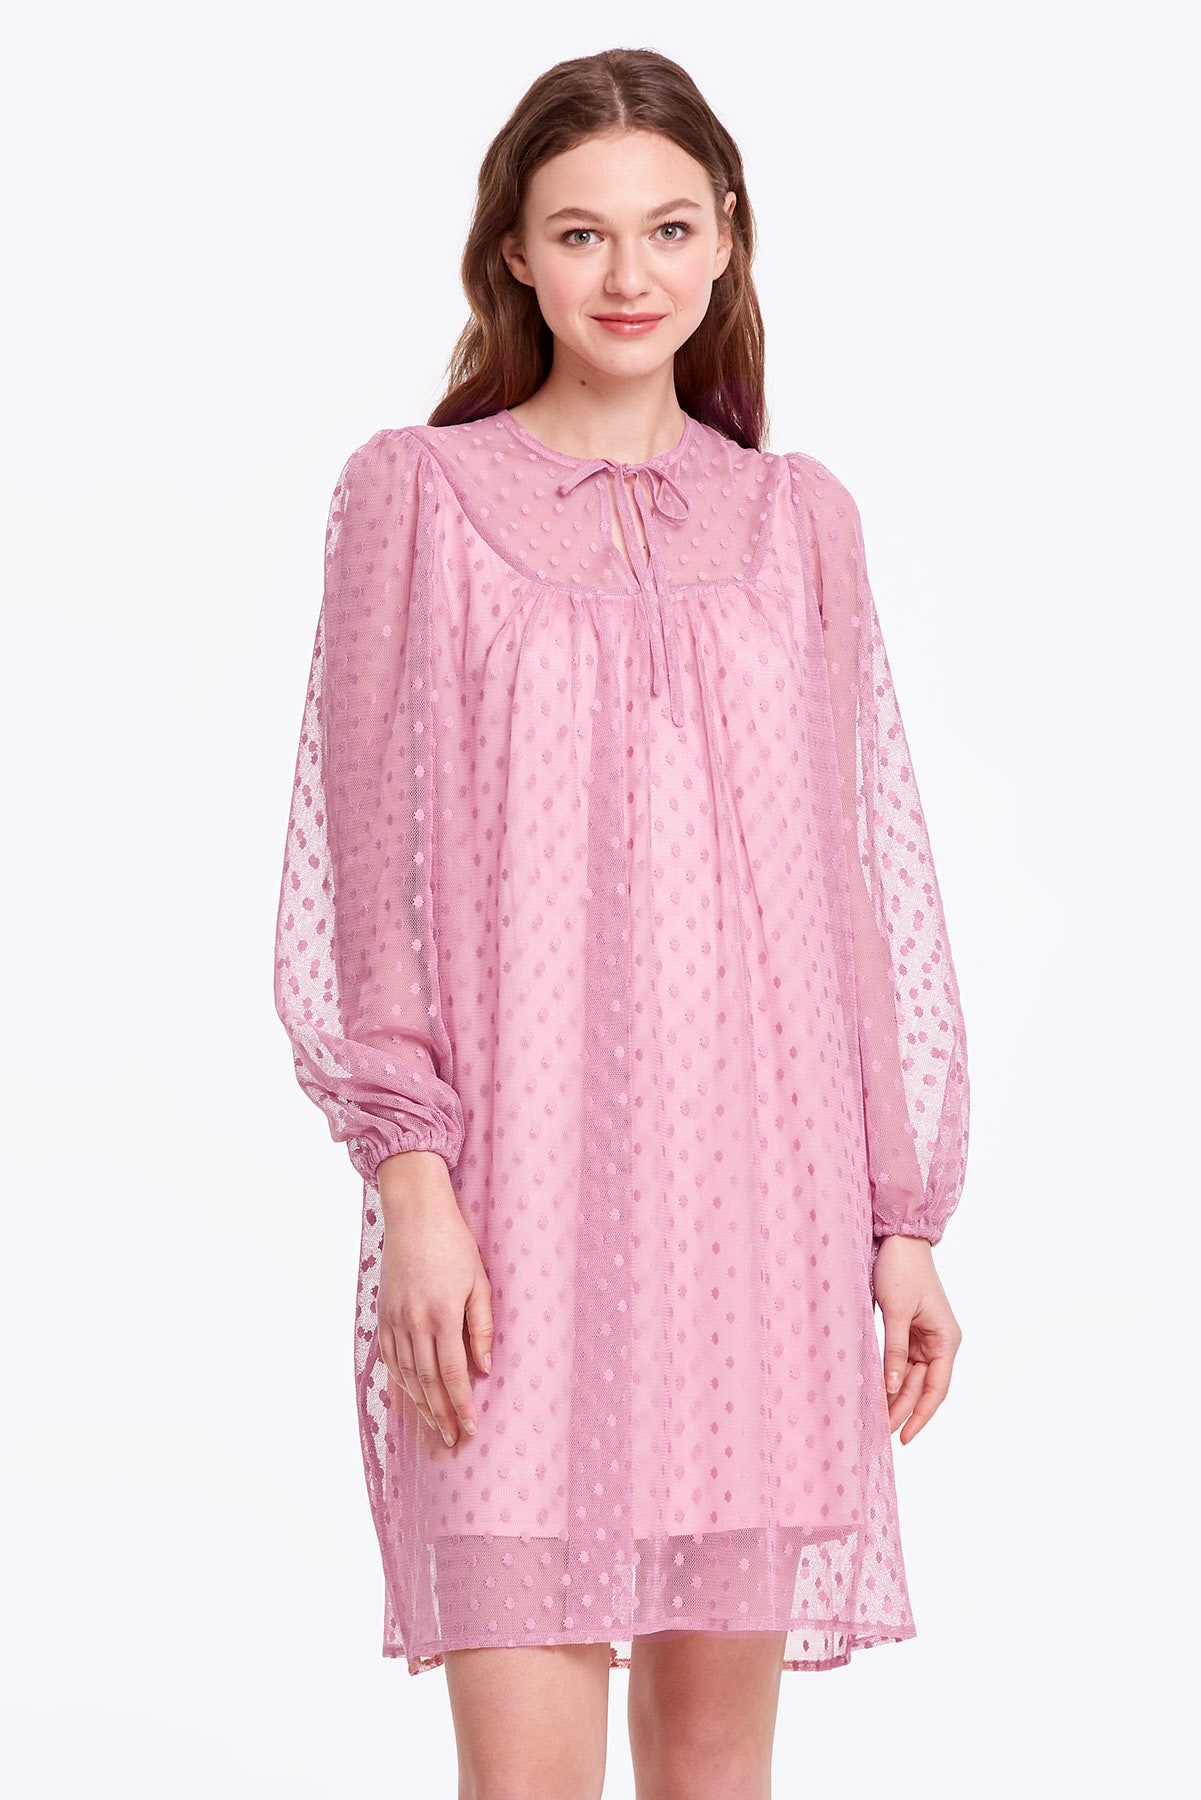 Pink dress with a polka dot print and ties, photo 8